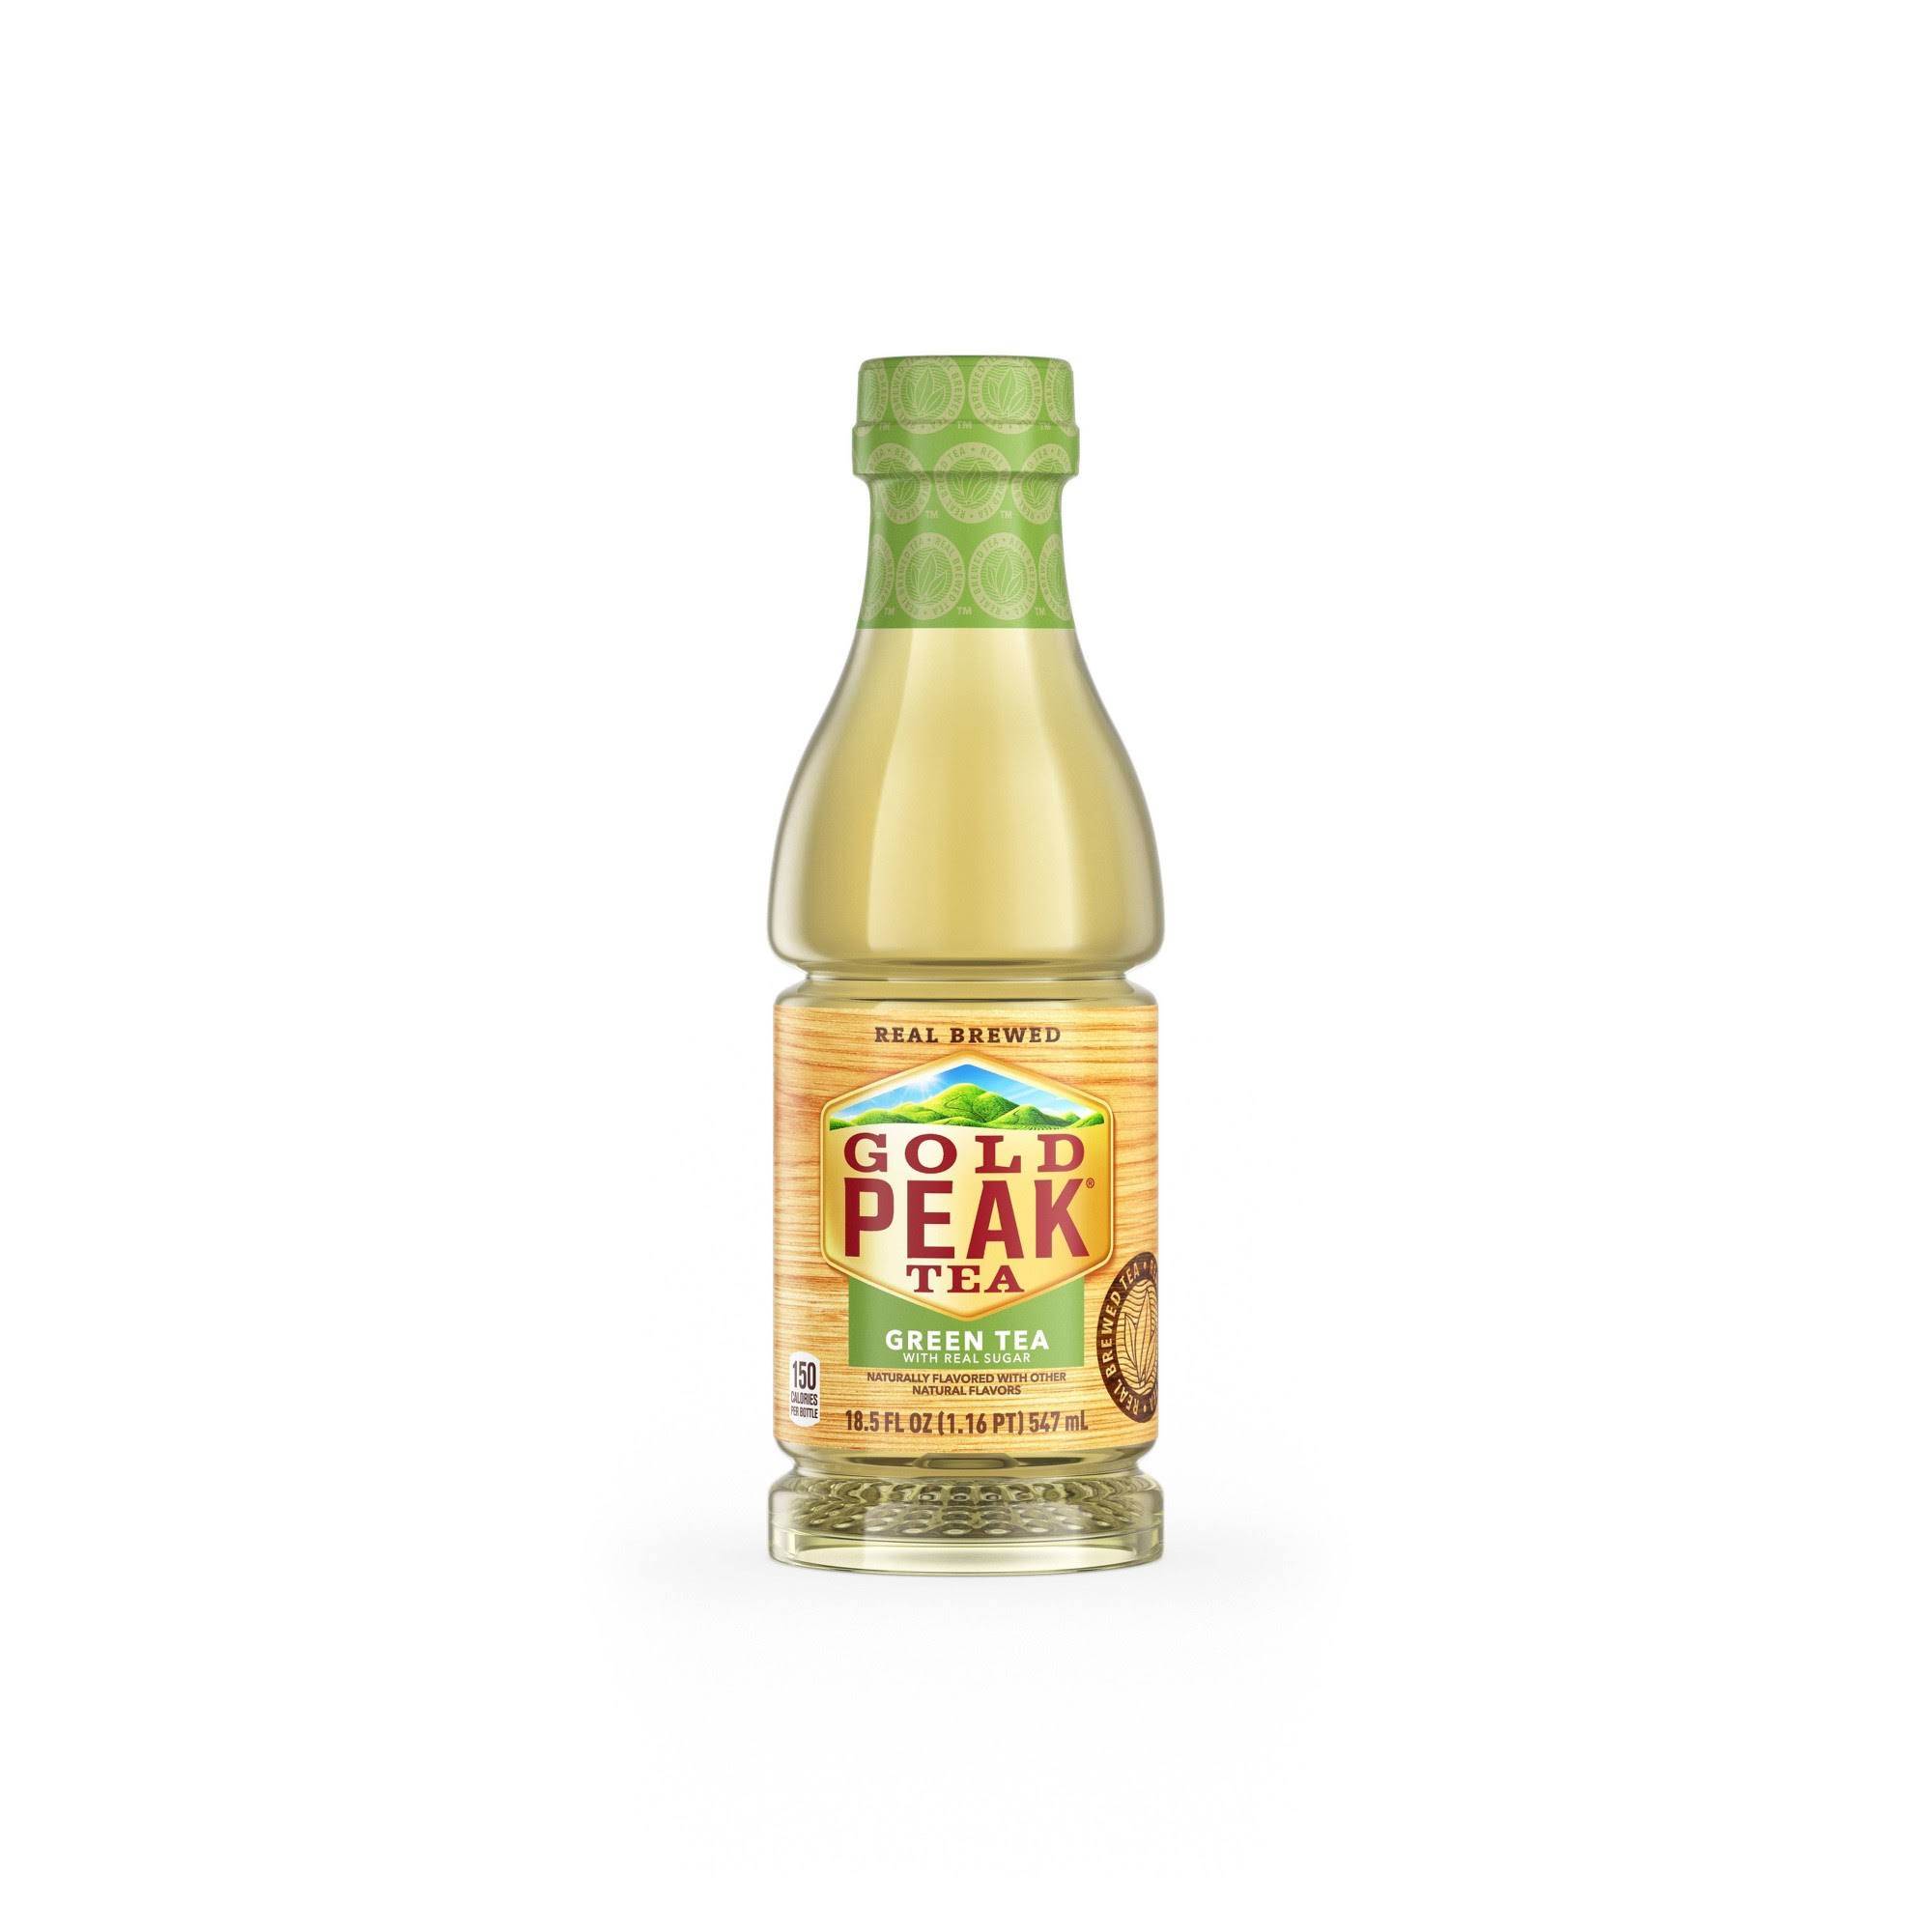 Gold Peak Iced Green Tea - 18.5 oz